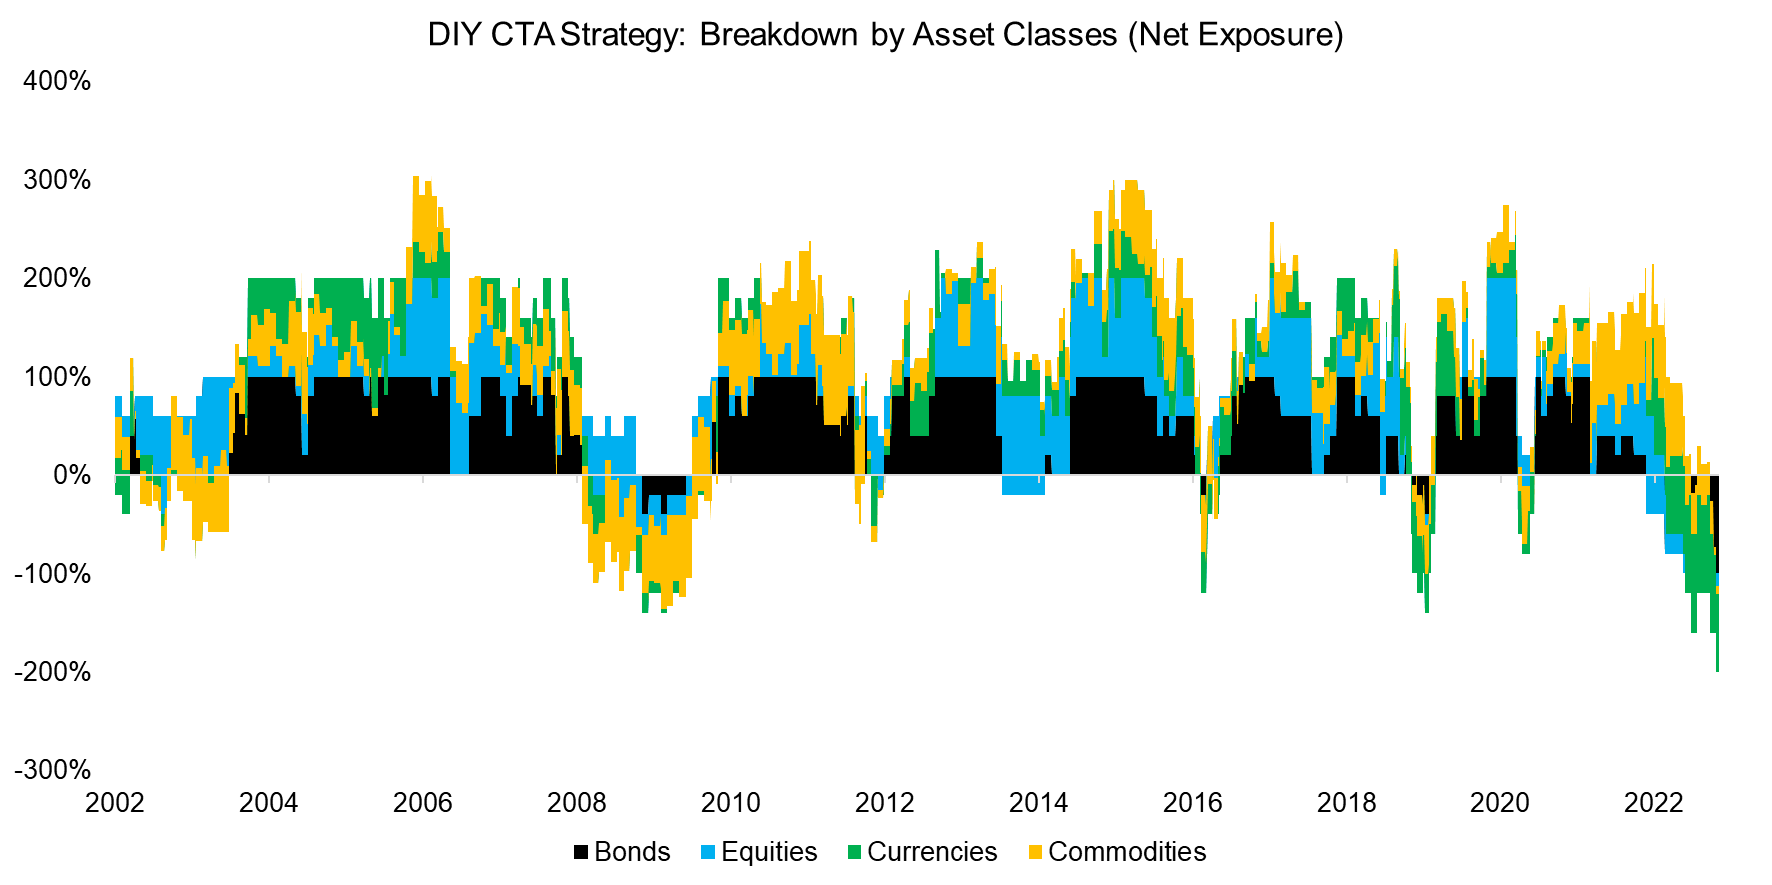 DIY CTA Strategy Breakdown by Asset Classes (Net Exposure)